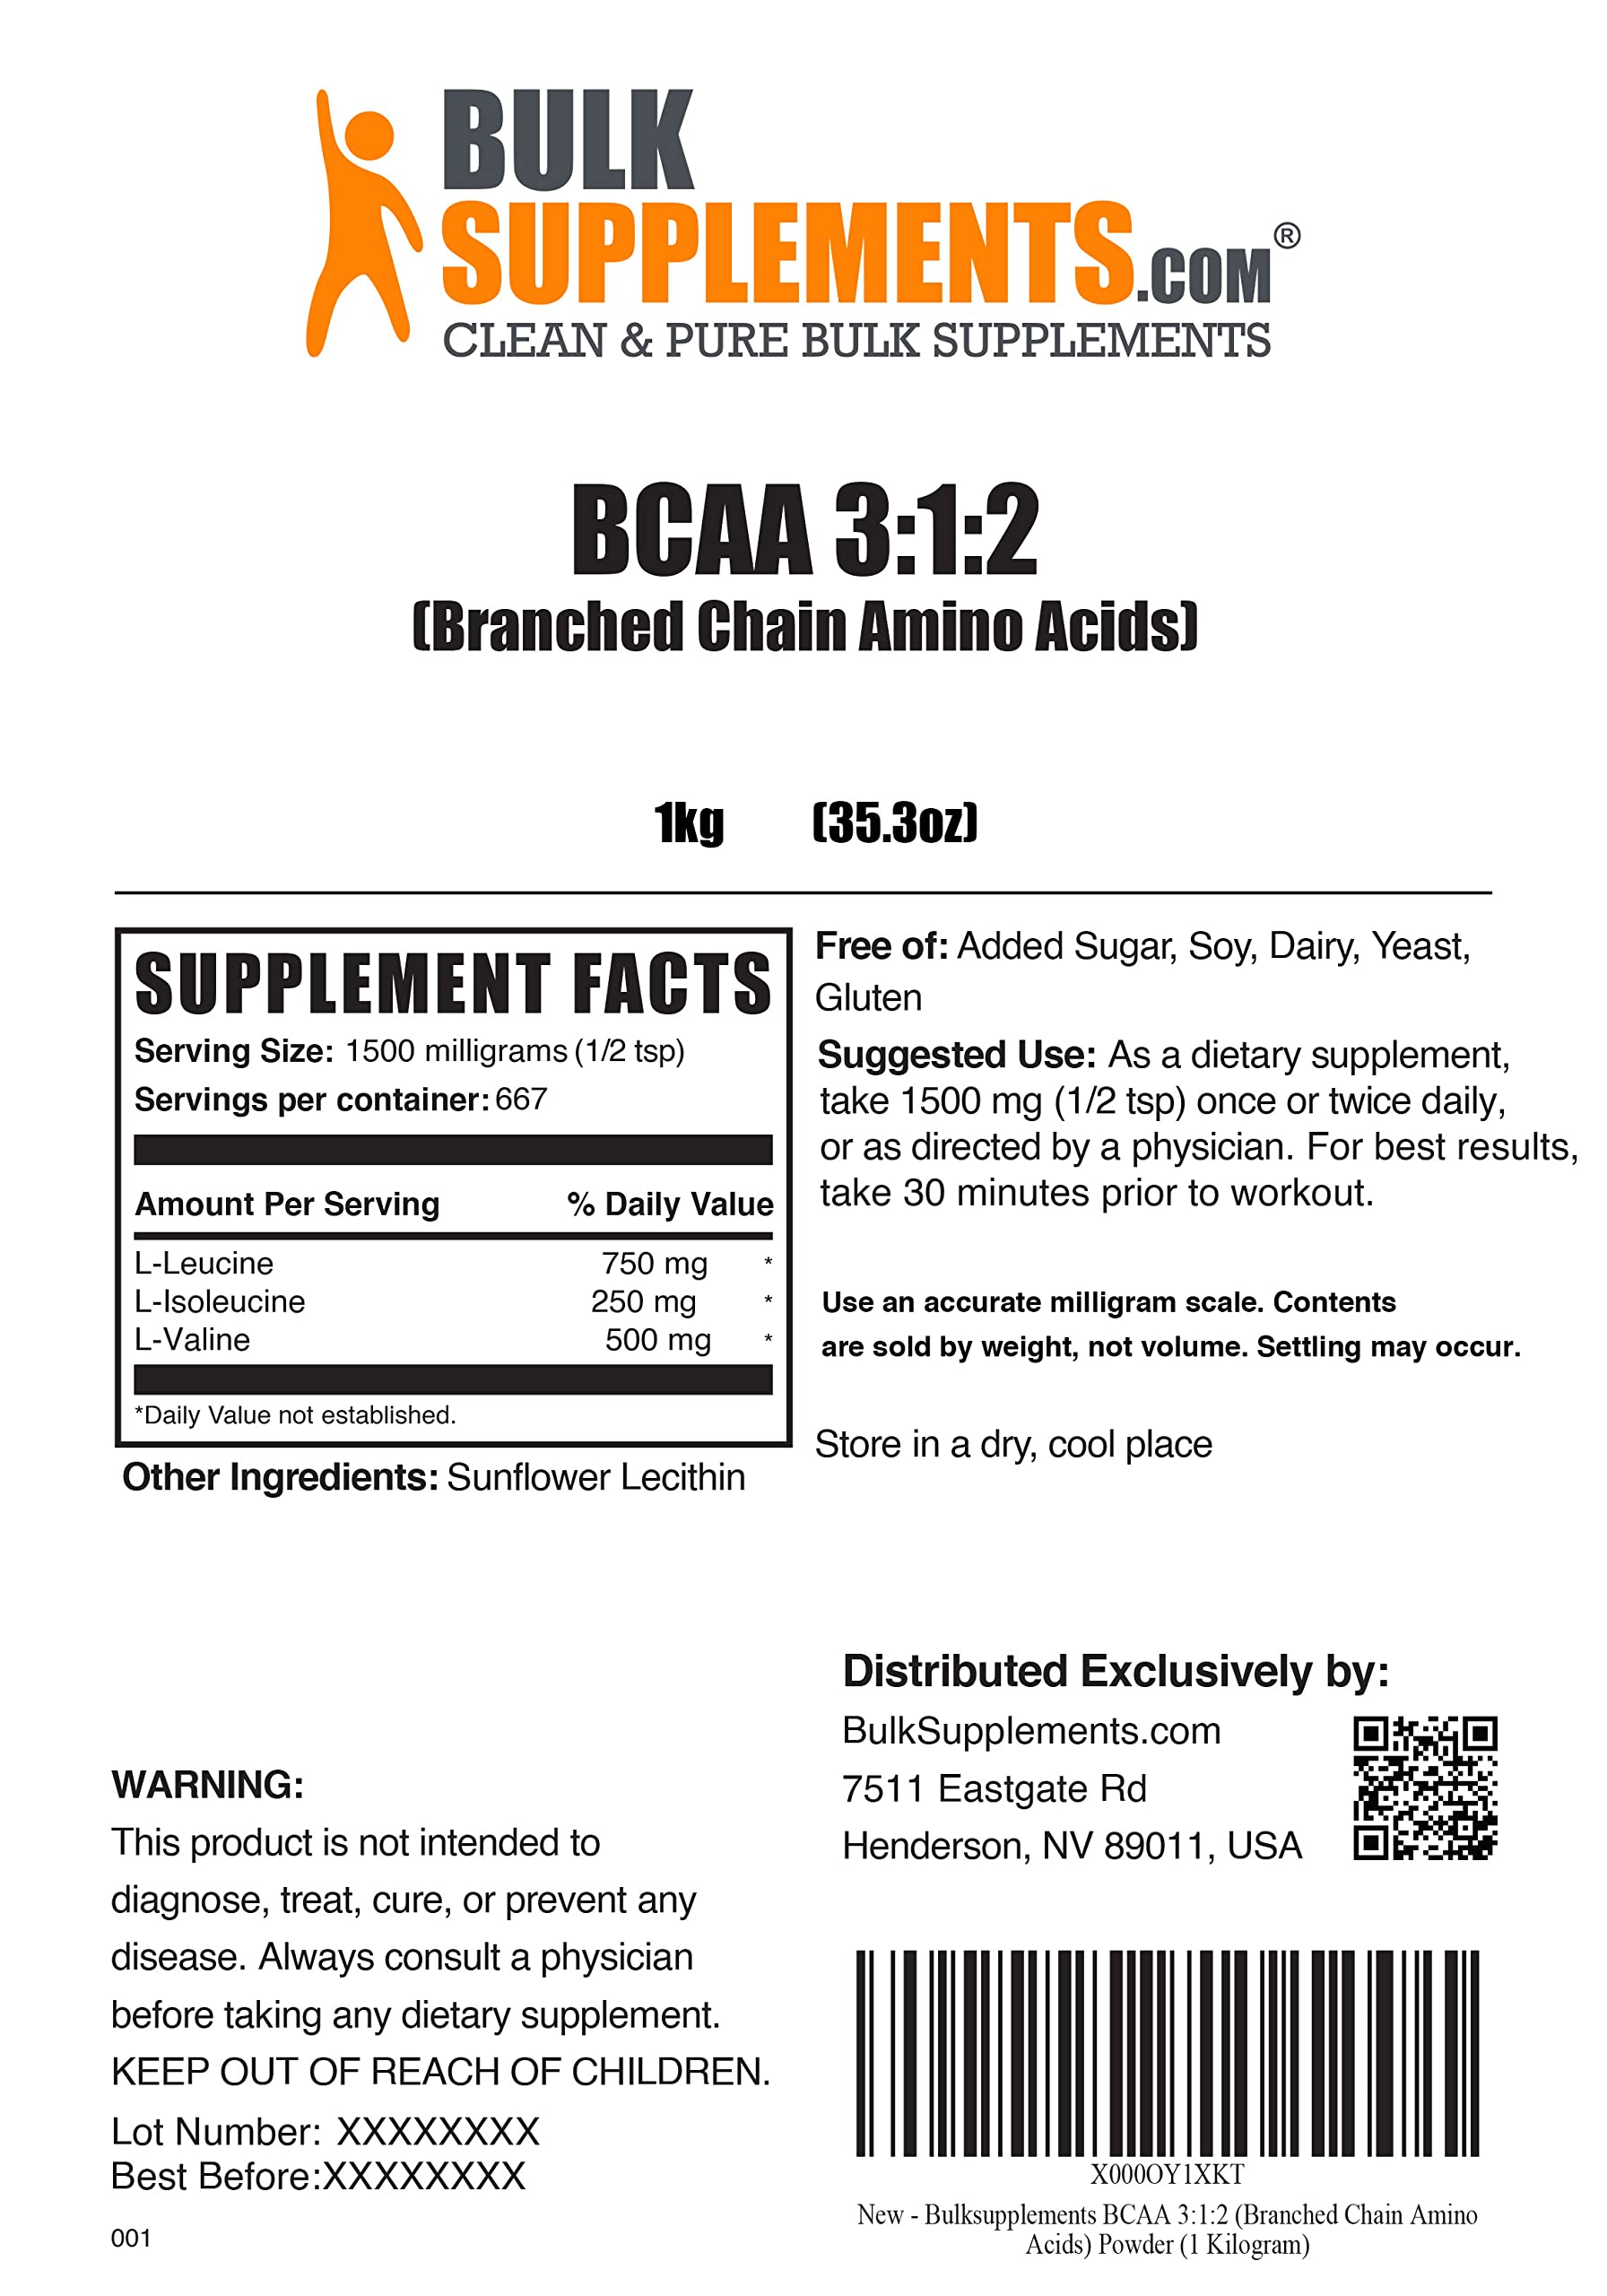 BULKSUPPLEMENTS.COM BCAA 3:1:2 Powder 1kg, Creatine Powder 500g, Beta Alanine Powder 500g, & L-Glutamine Powder 1kg (Pack of 4) Bundle